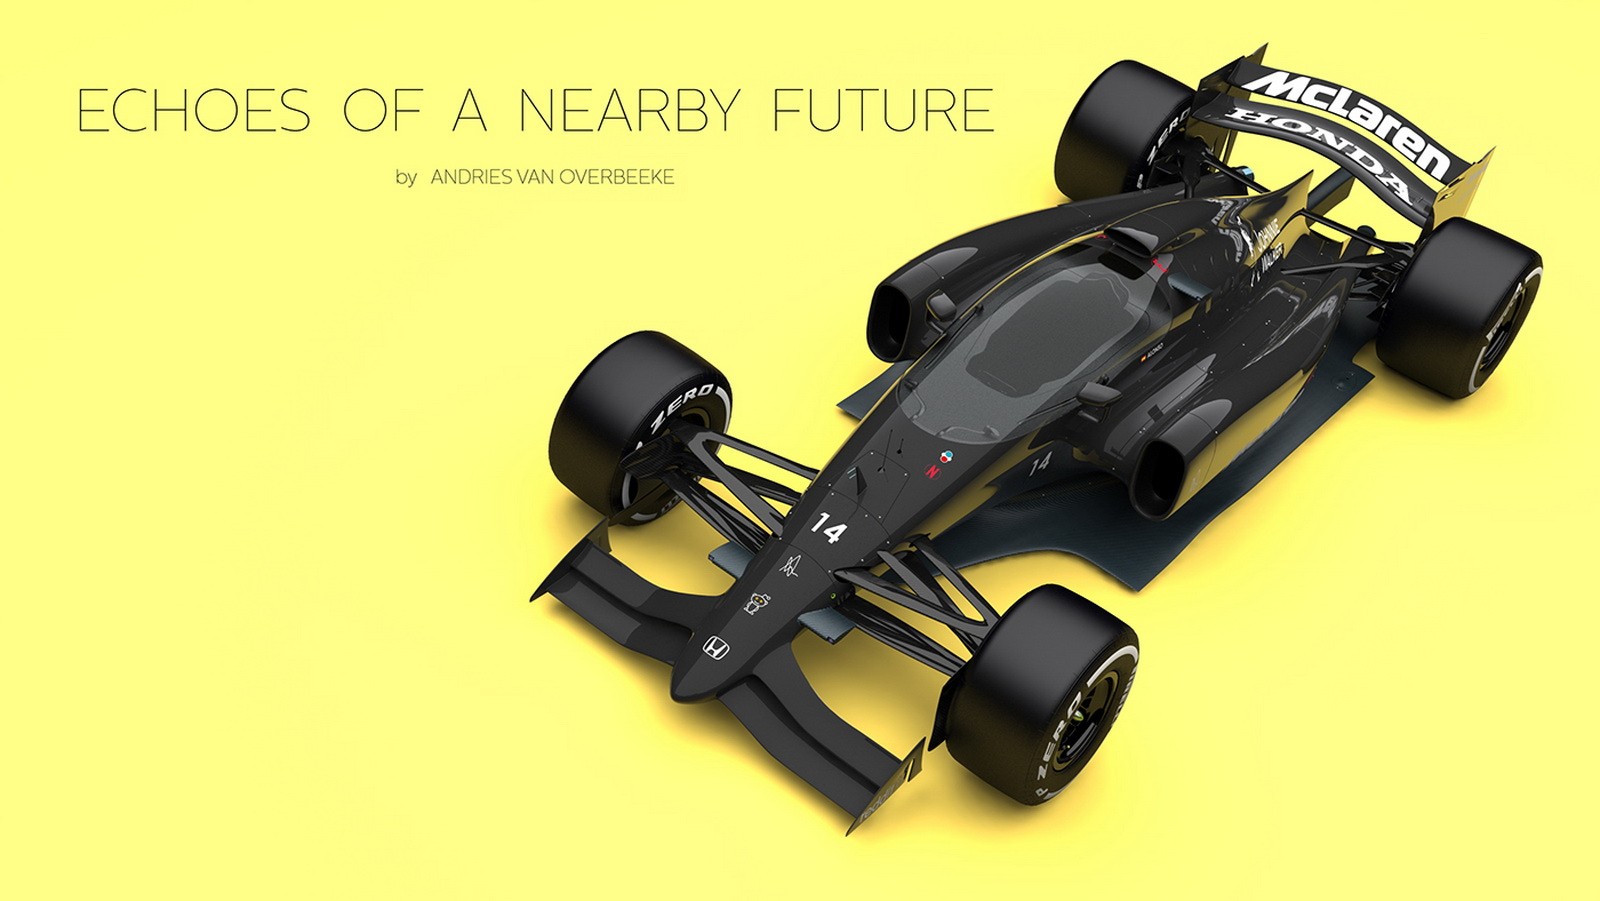 future-formula-1-concept-earns-closed-cockpit-honda-mclaren-livery-photo-gallery_28